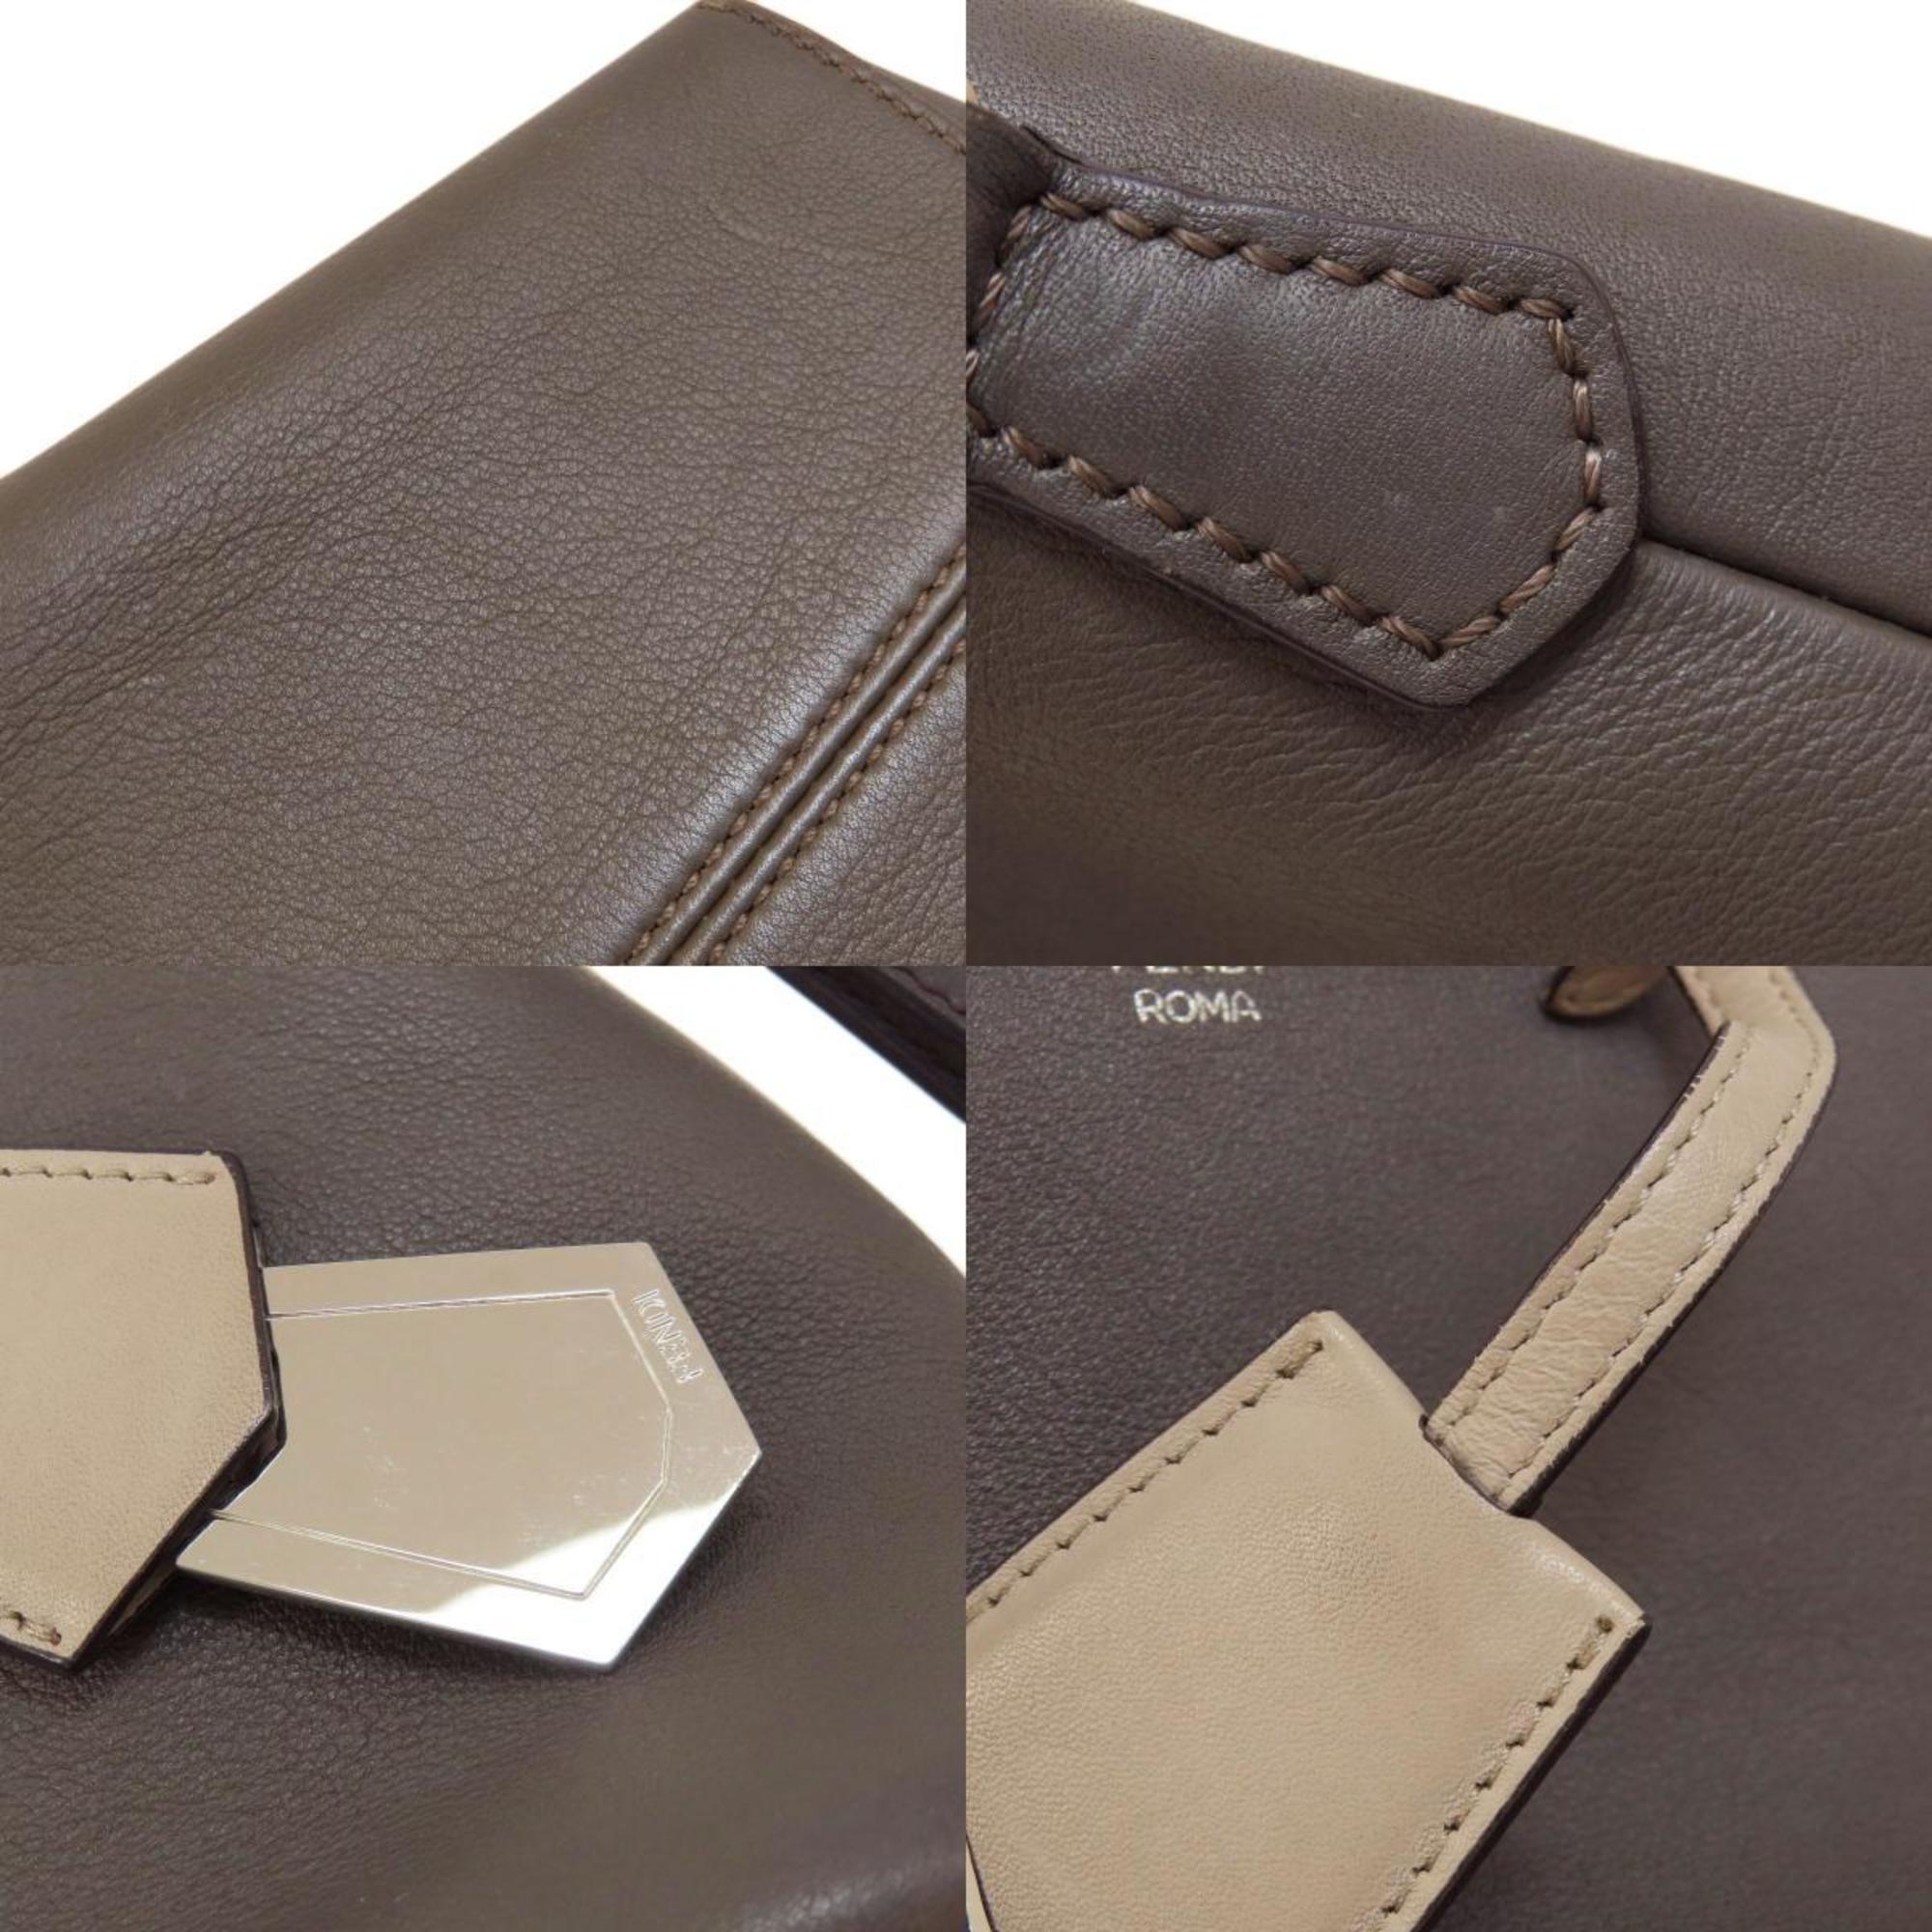 Fendi Women's Leather Handbag Gray